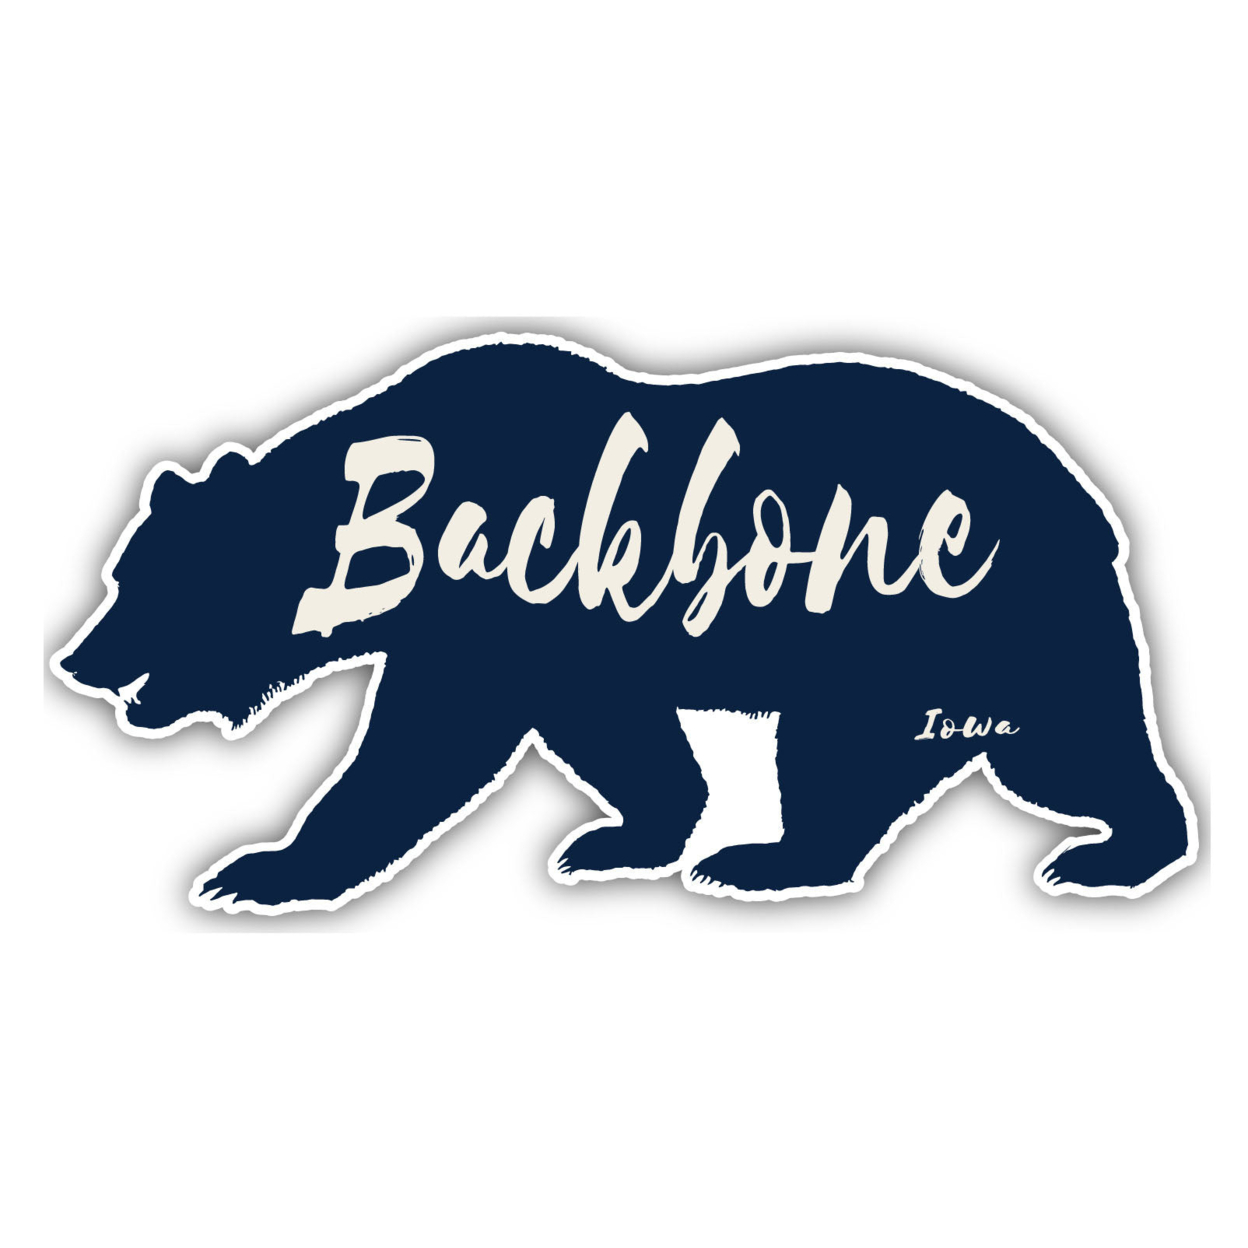 Backbone Iowa Souvenir Decorative Stickers (Choose Theme And Size) - Single Unit, 2-Inch, Bear